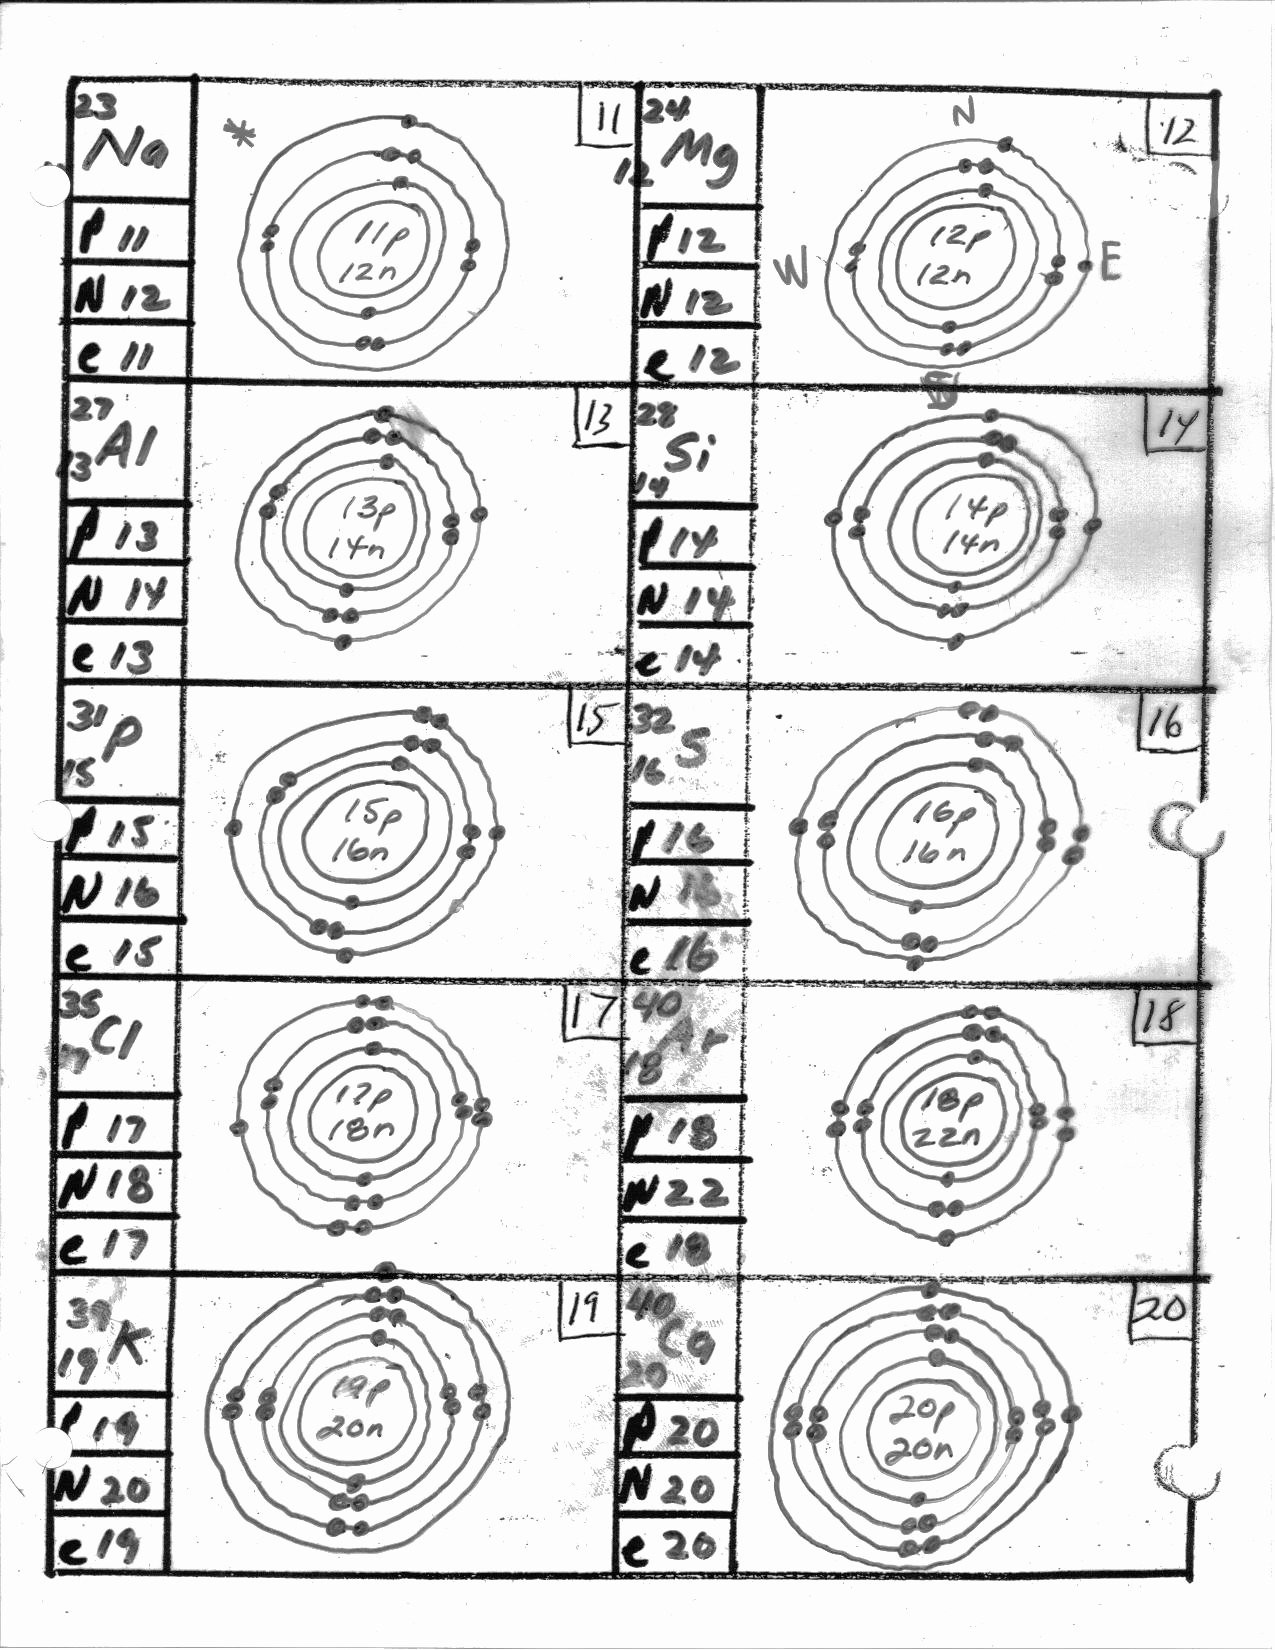 Bohr atomic Models Worksheet Answers Unique Bohr atomic Model Worksheets